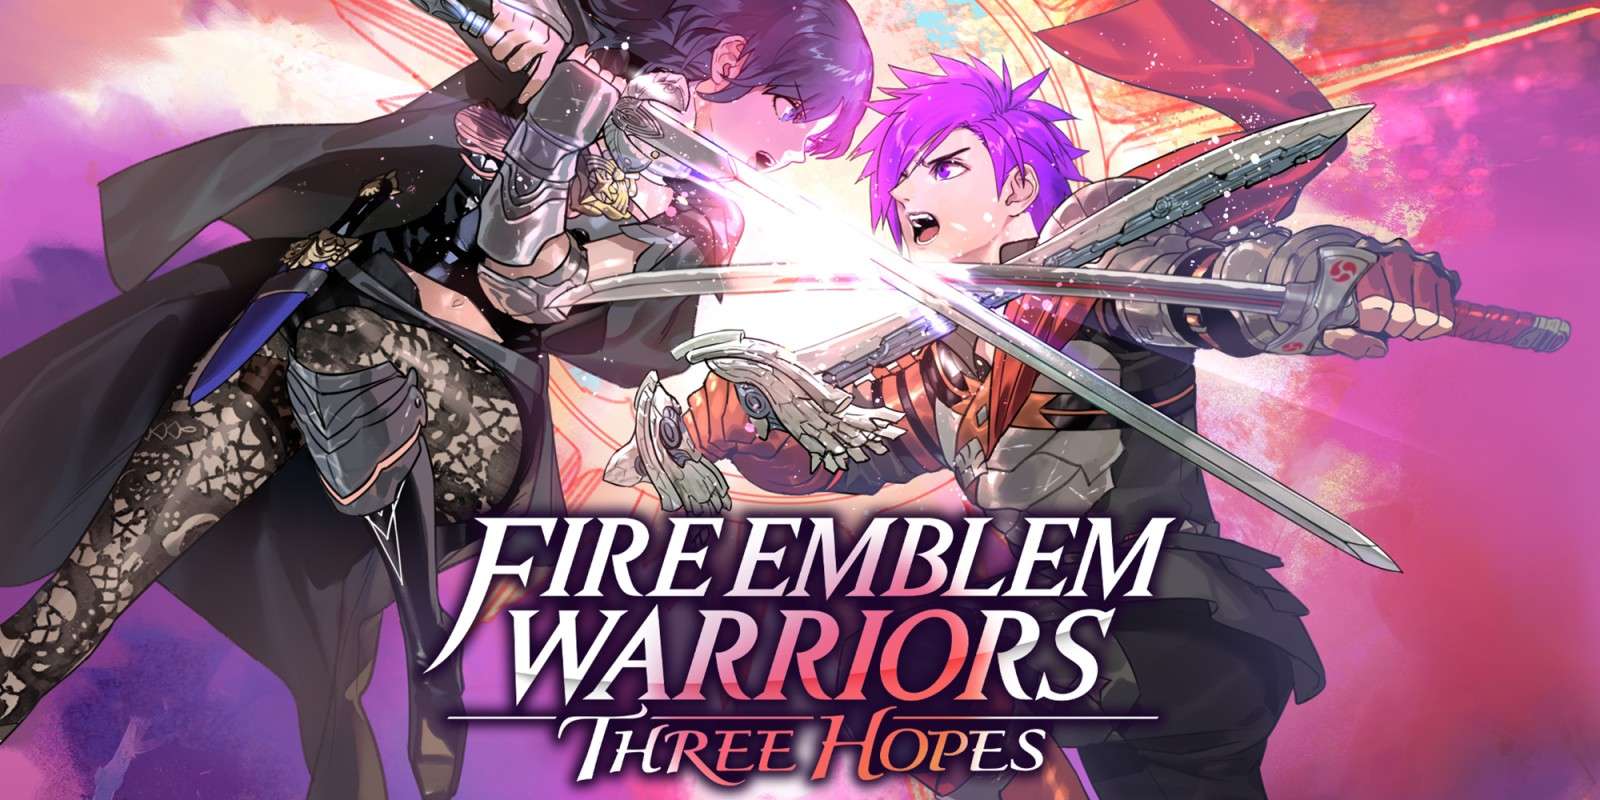 Fire Emblem Warriors Three Hopes trailer